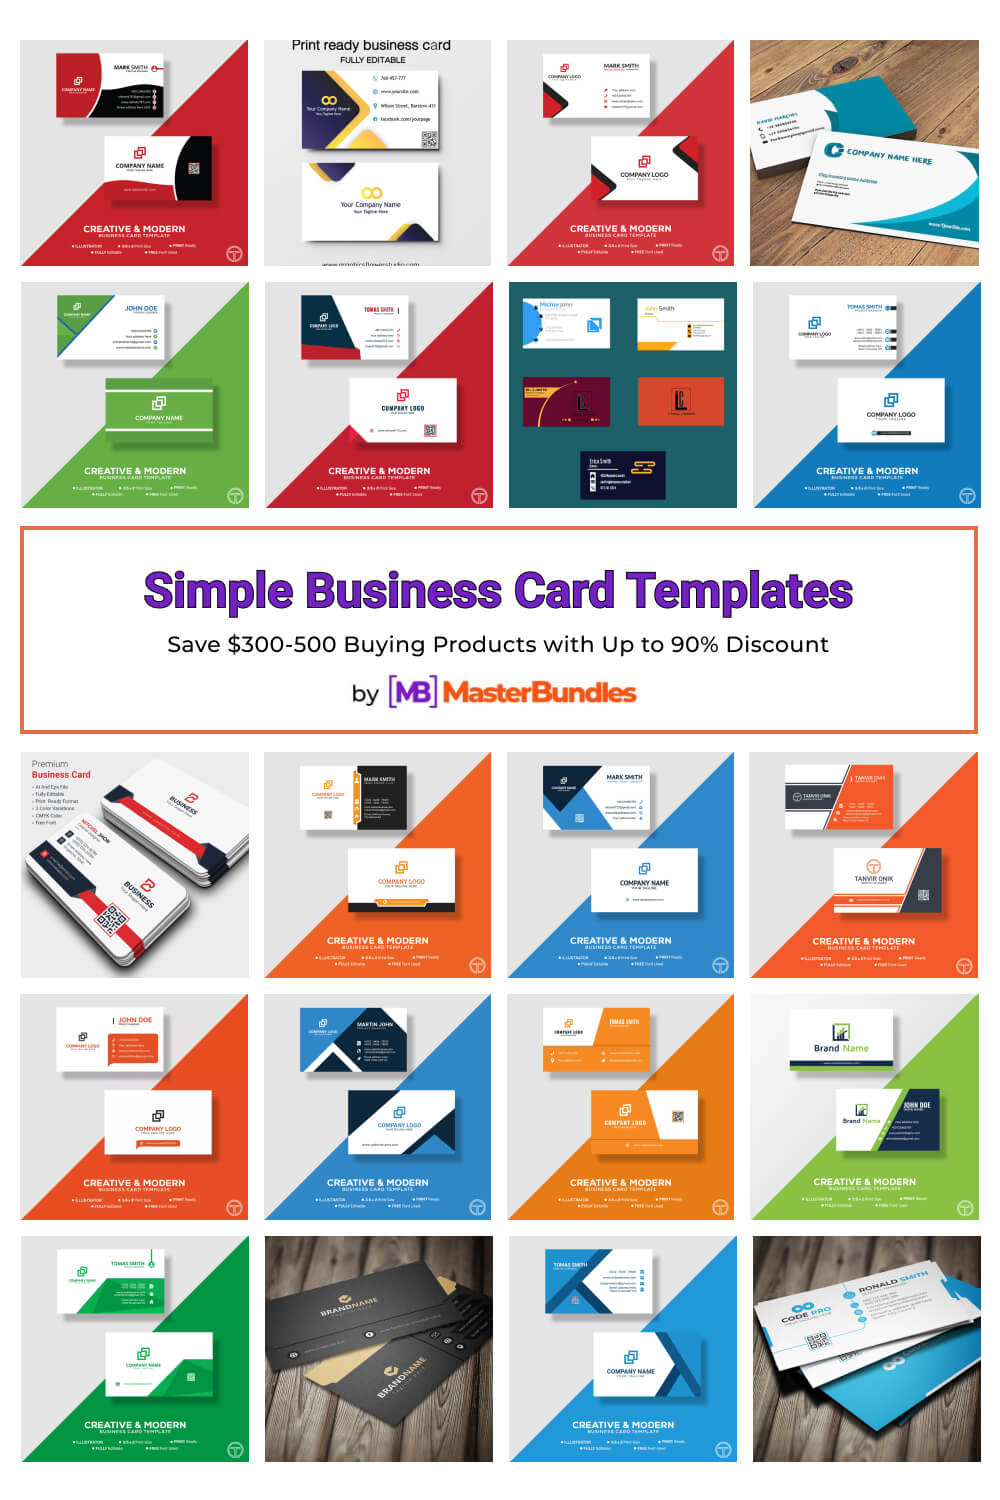 simple business card templates pinterest image.